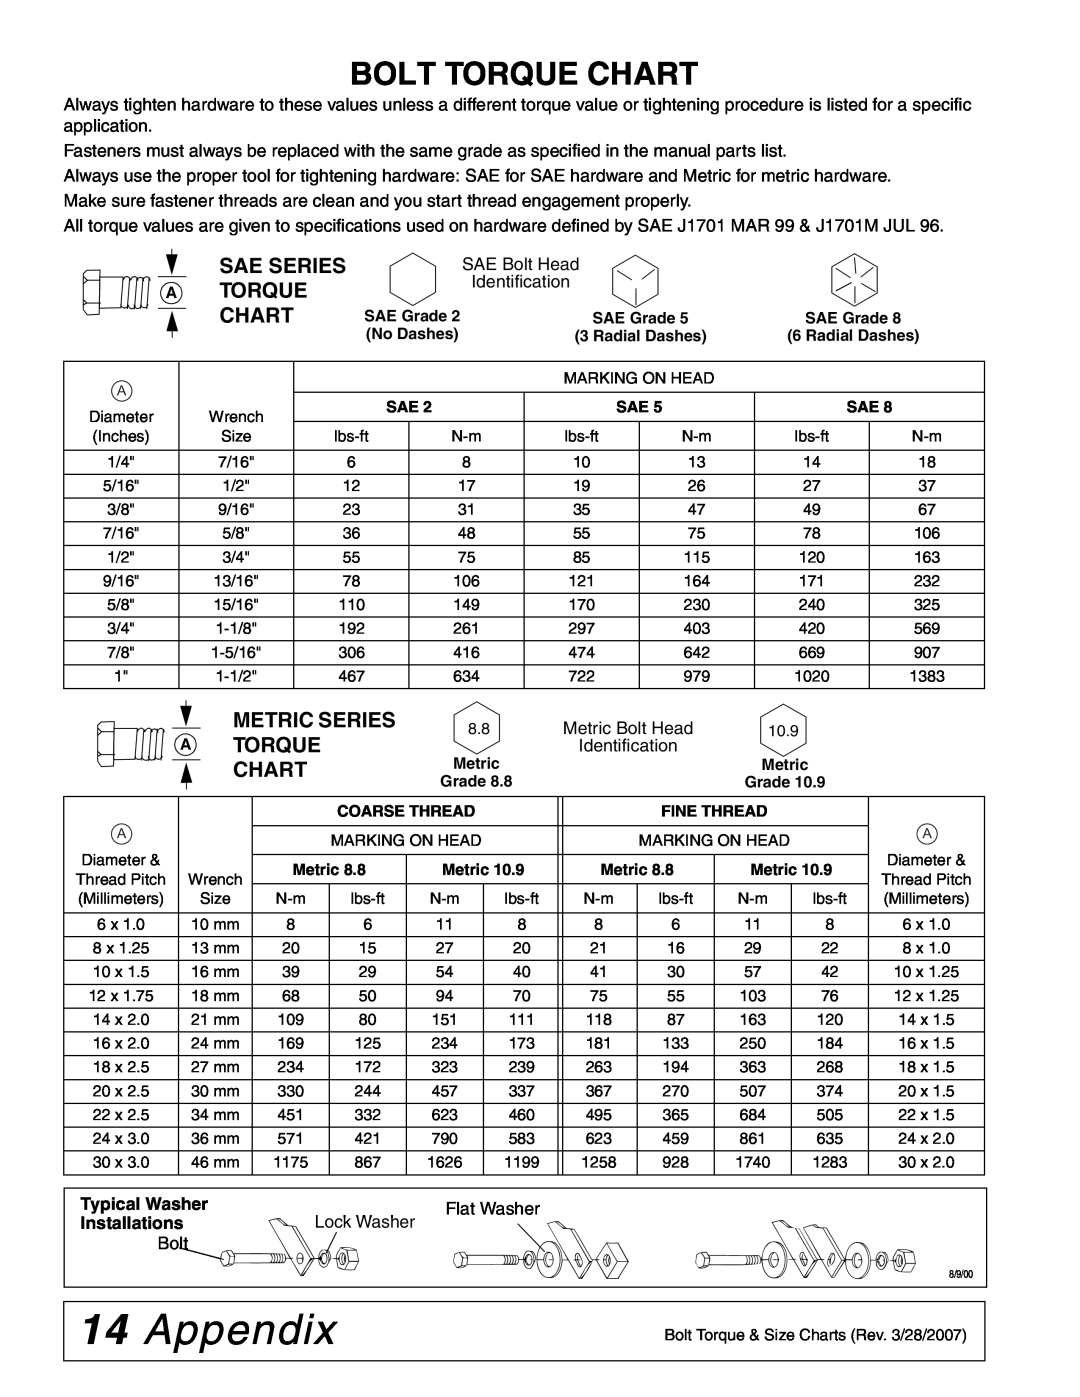 Woods Equipment ST500 manual Appendix, Bolt Torque Chart, Sae Series A Torque Chart, Metric Series 